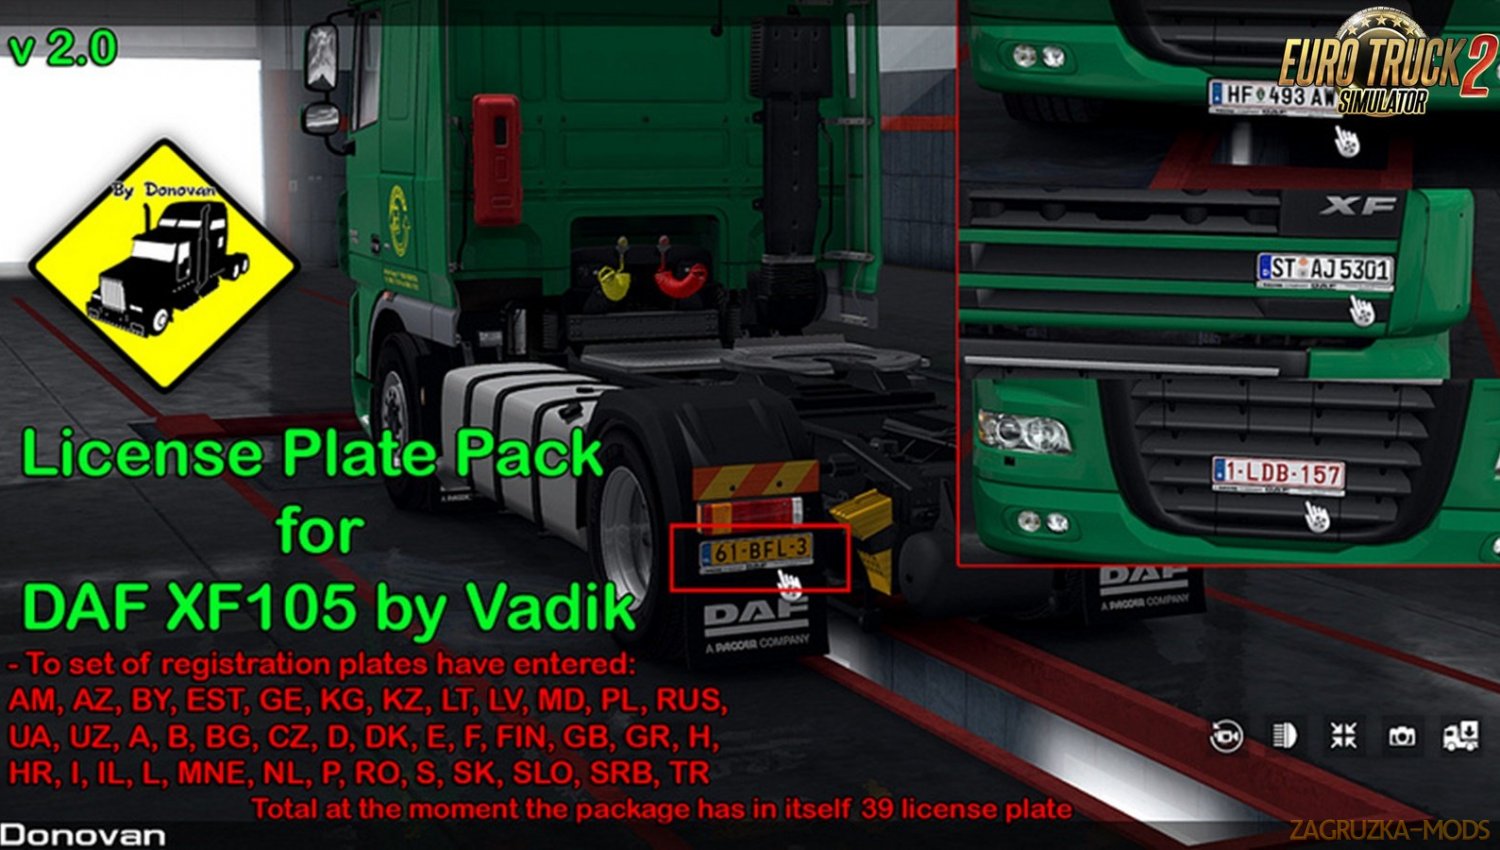 License Plate Pack for DAF XF105 v2.0 by Vad&k